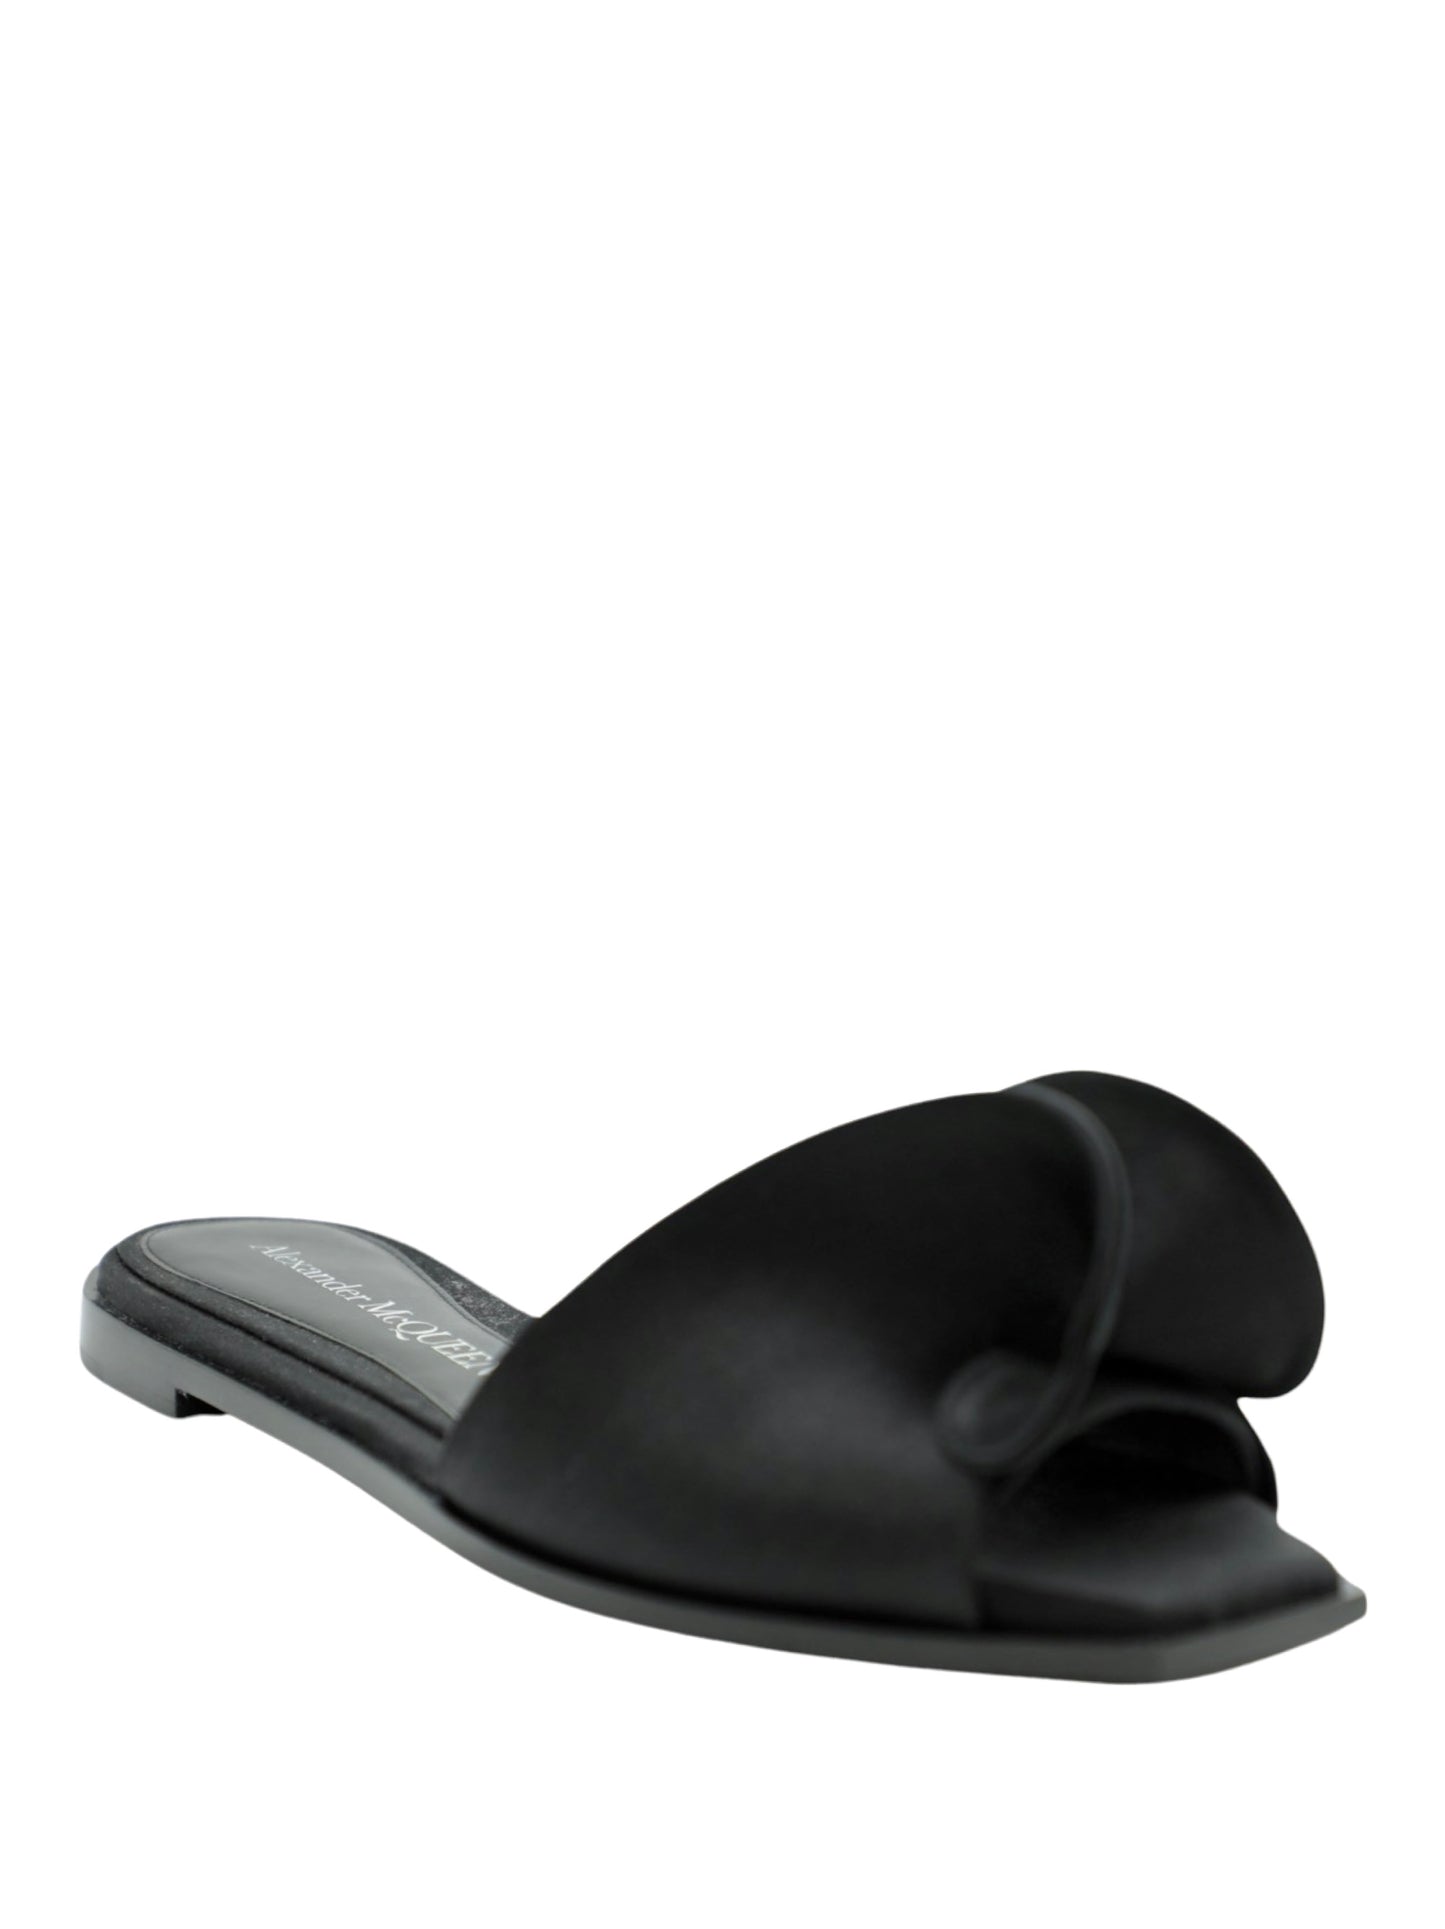 Alexander McQueen Crepe Silk Sandal in Black